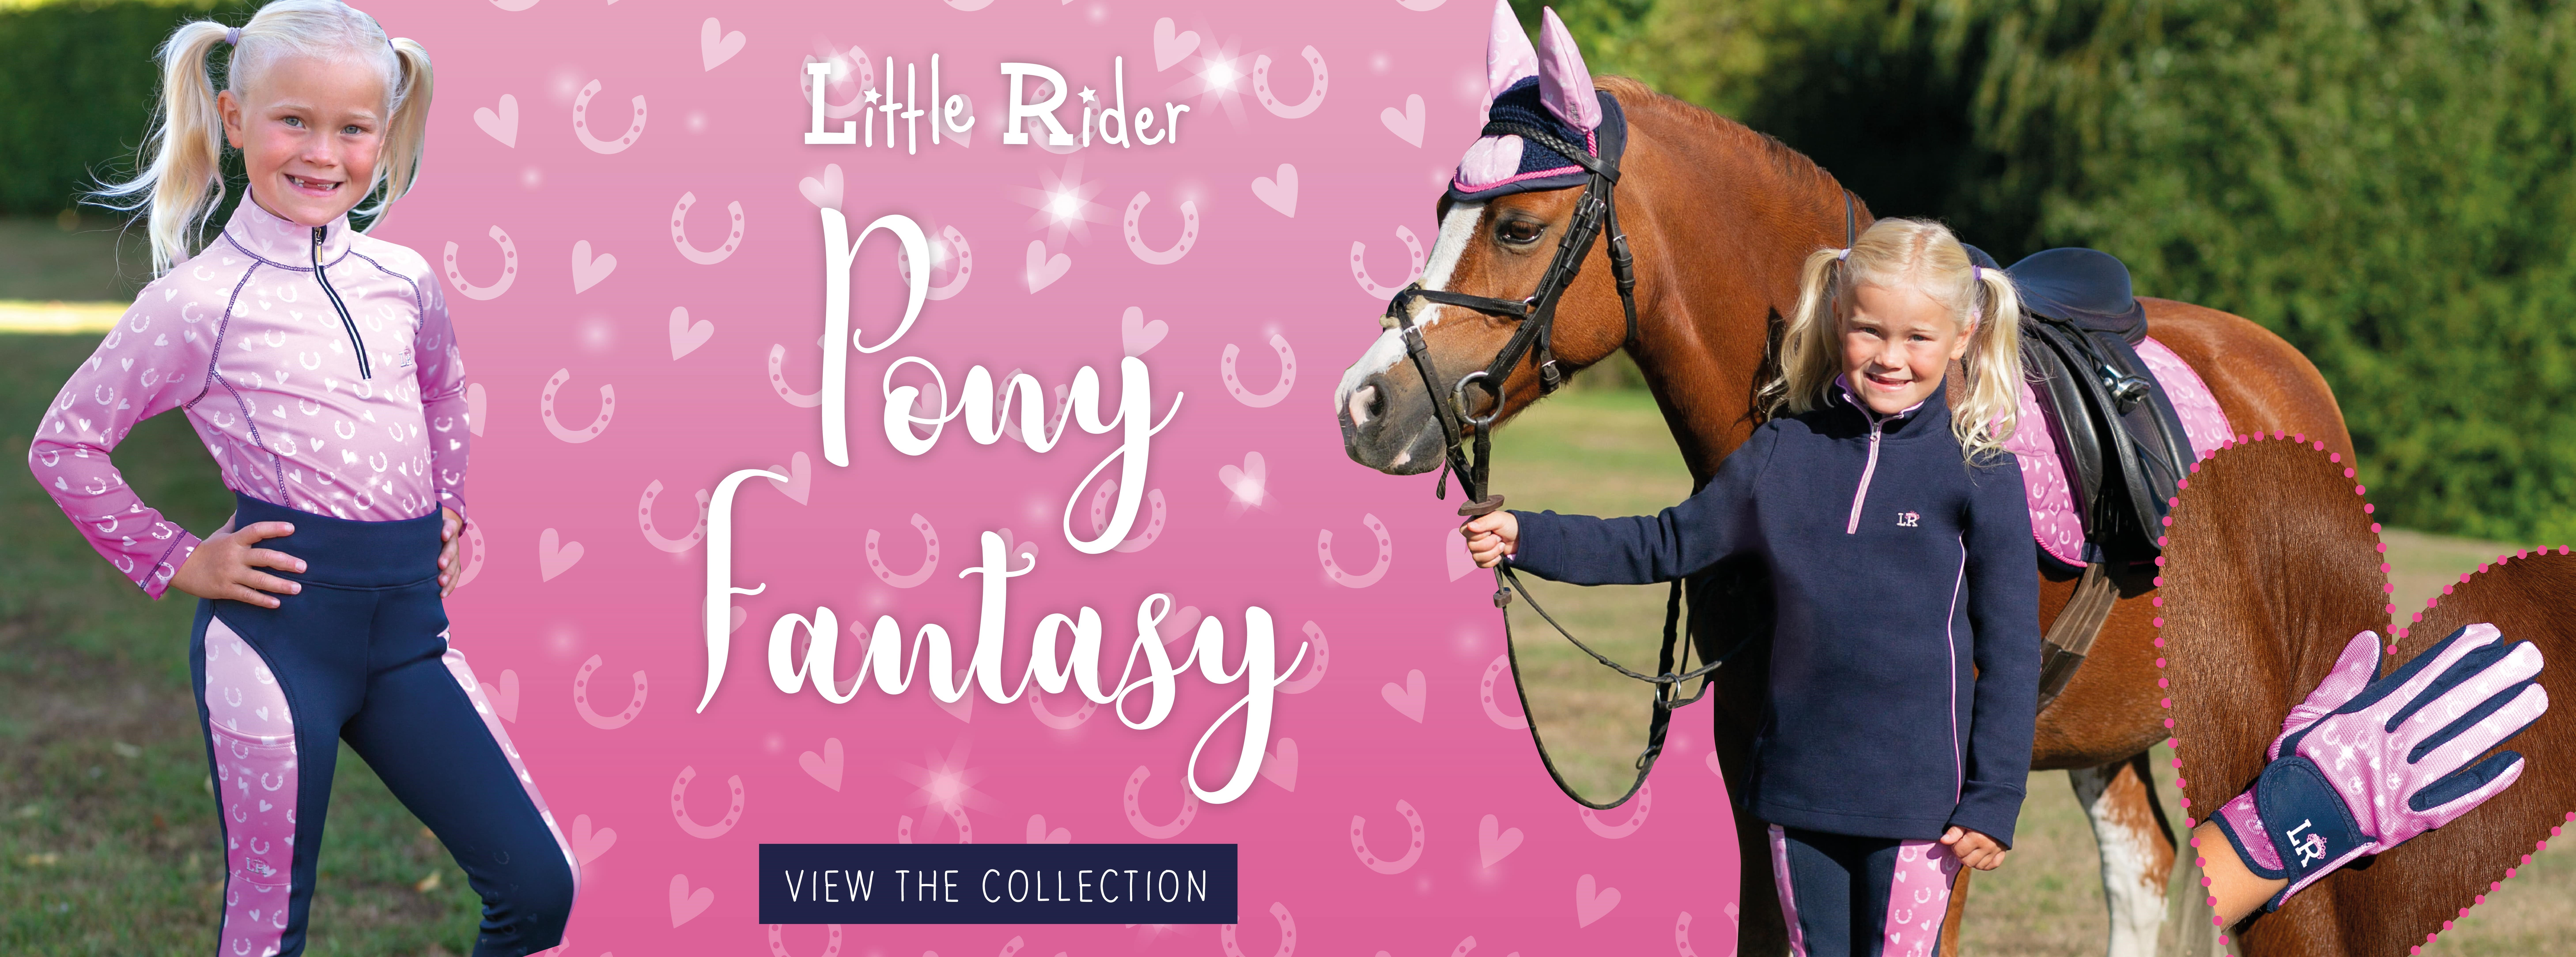 Little Rider - Pony Fantasy Banner